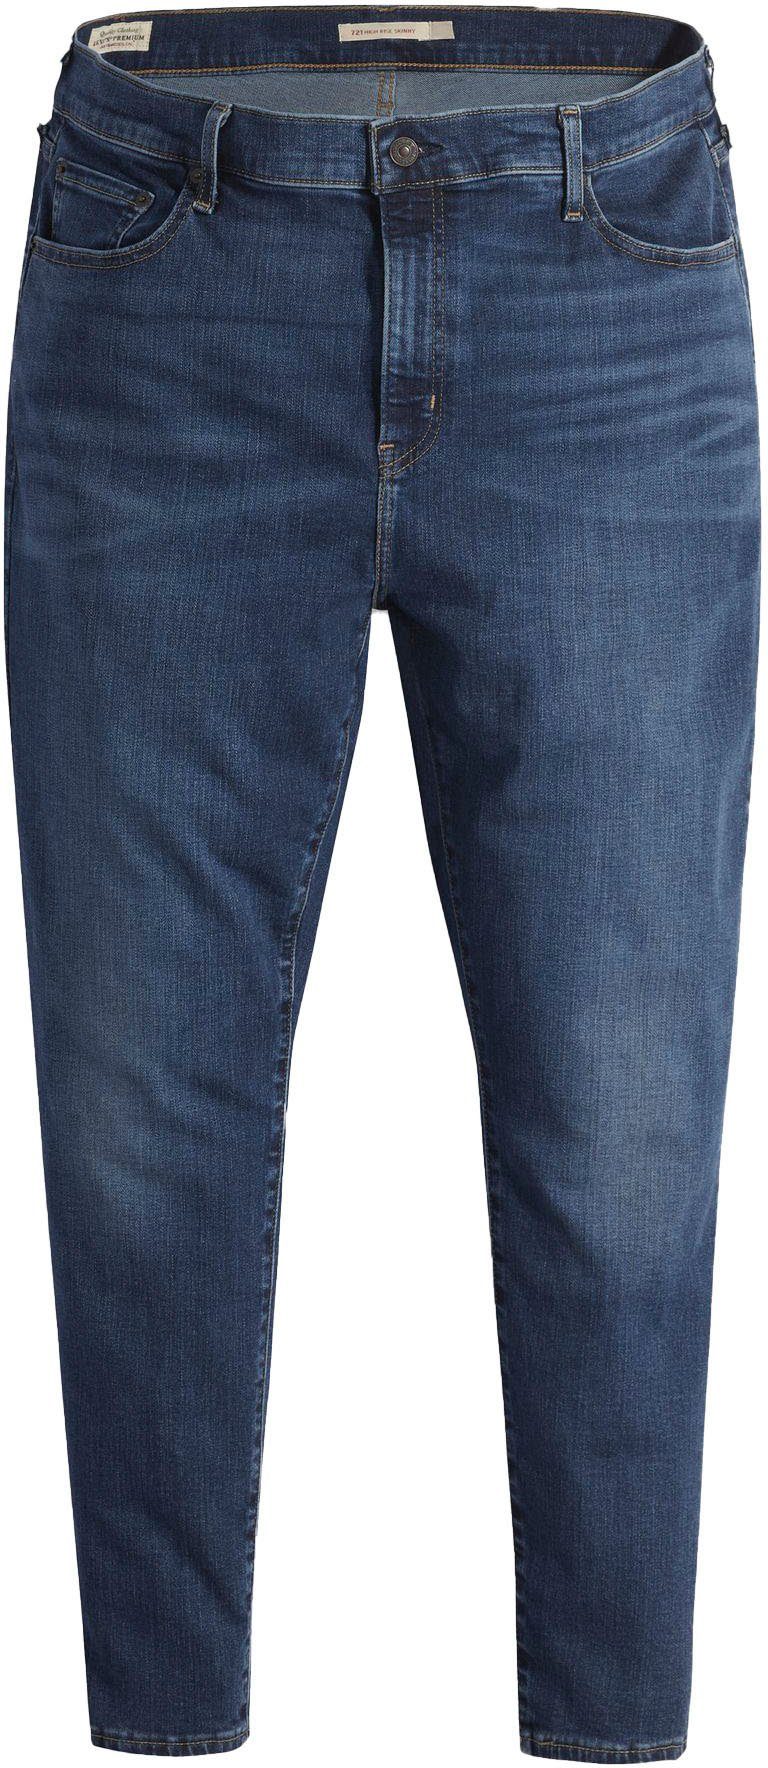 721 blue RISE dark HI Plus sehr Skinny-fit-Jeans figurbetonter Schnitt PL Levi's® SKINNY